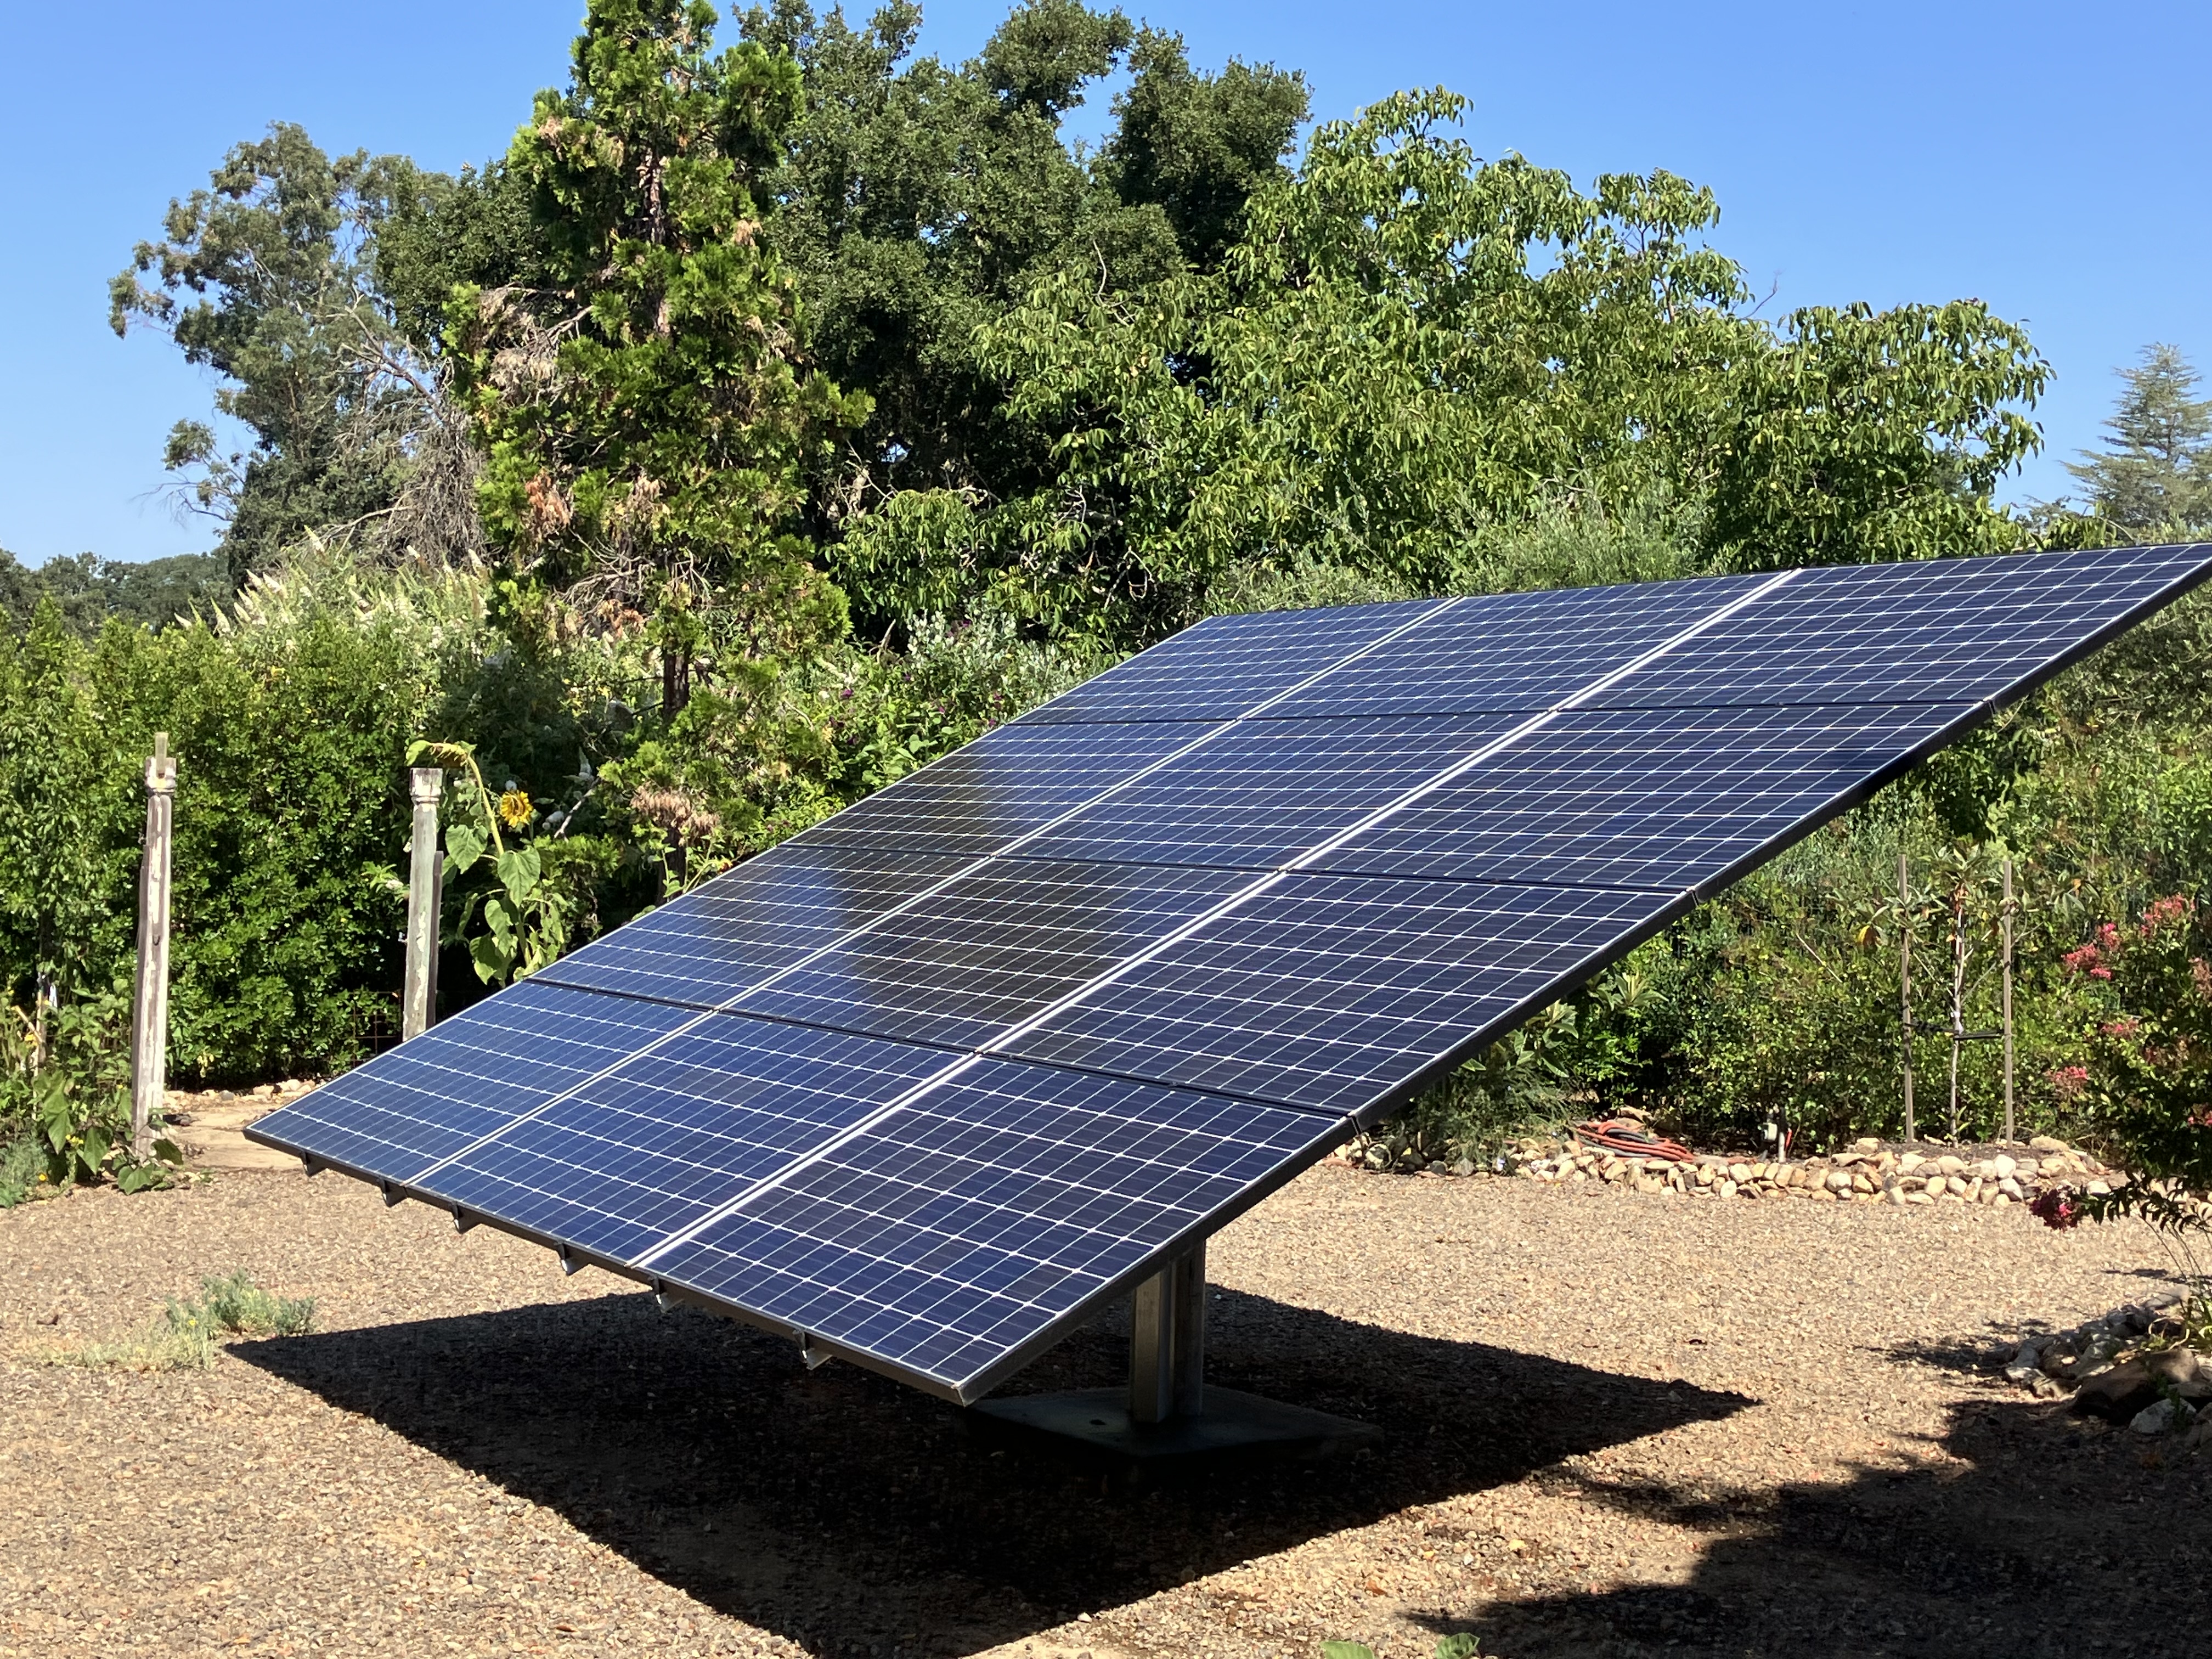  Super Clean of Ground Mount Solar Panels in Glen Ellen, Ca. Thumbnail